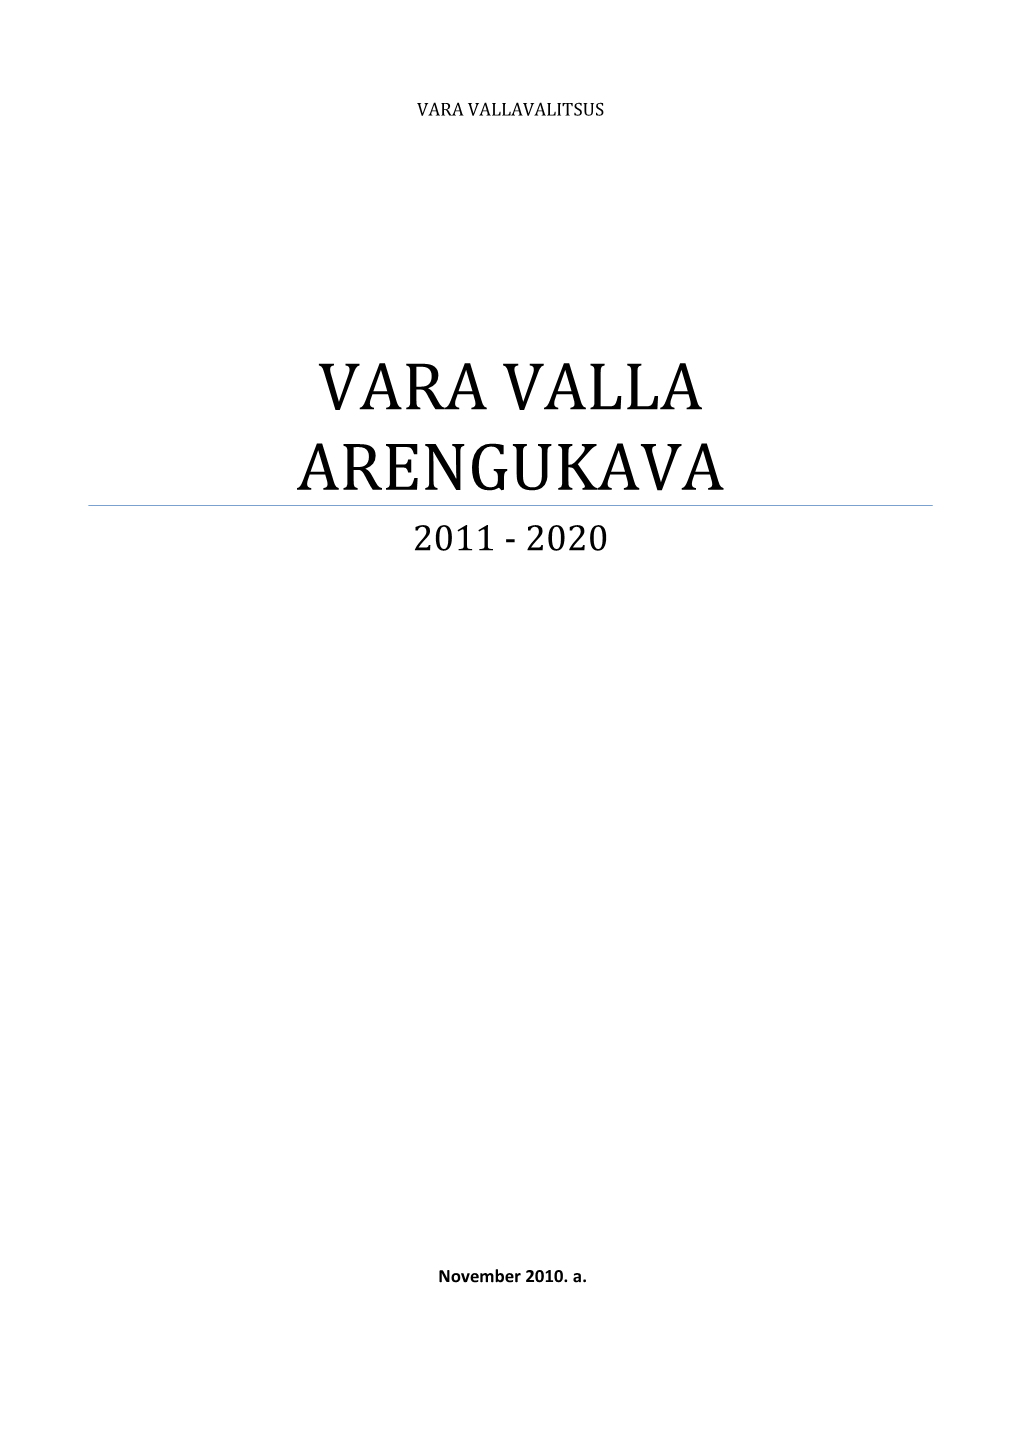 Vara Valla Arengukava 2011 - 2020